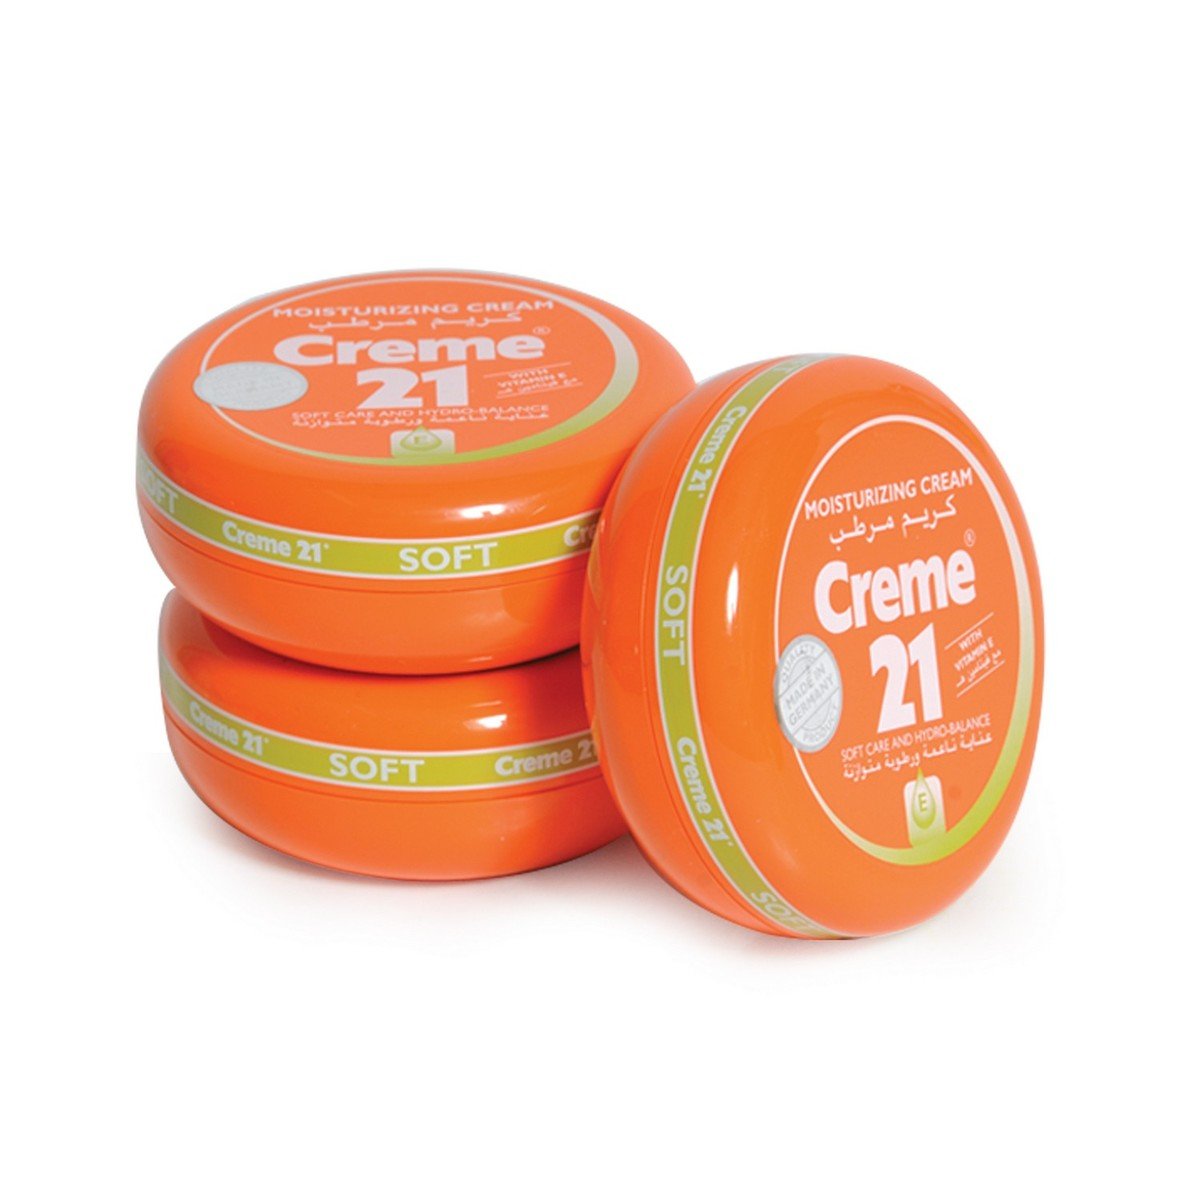 Creme 21 All Day Cream 150ml x 2+1